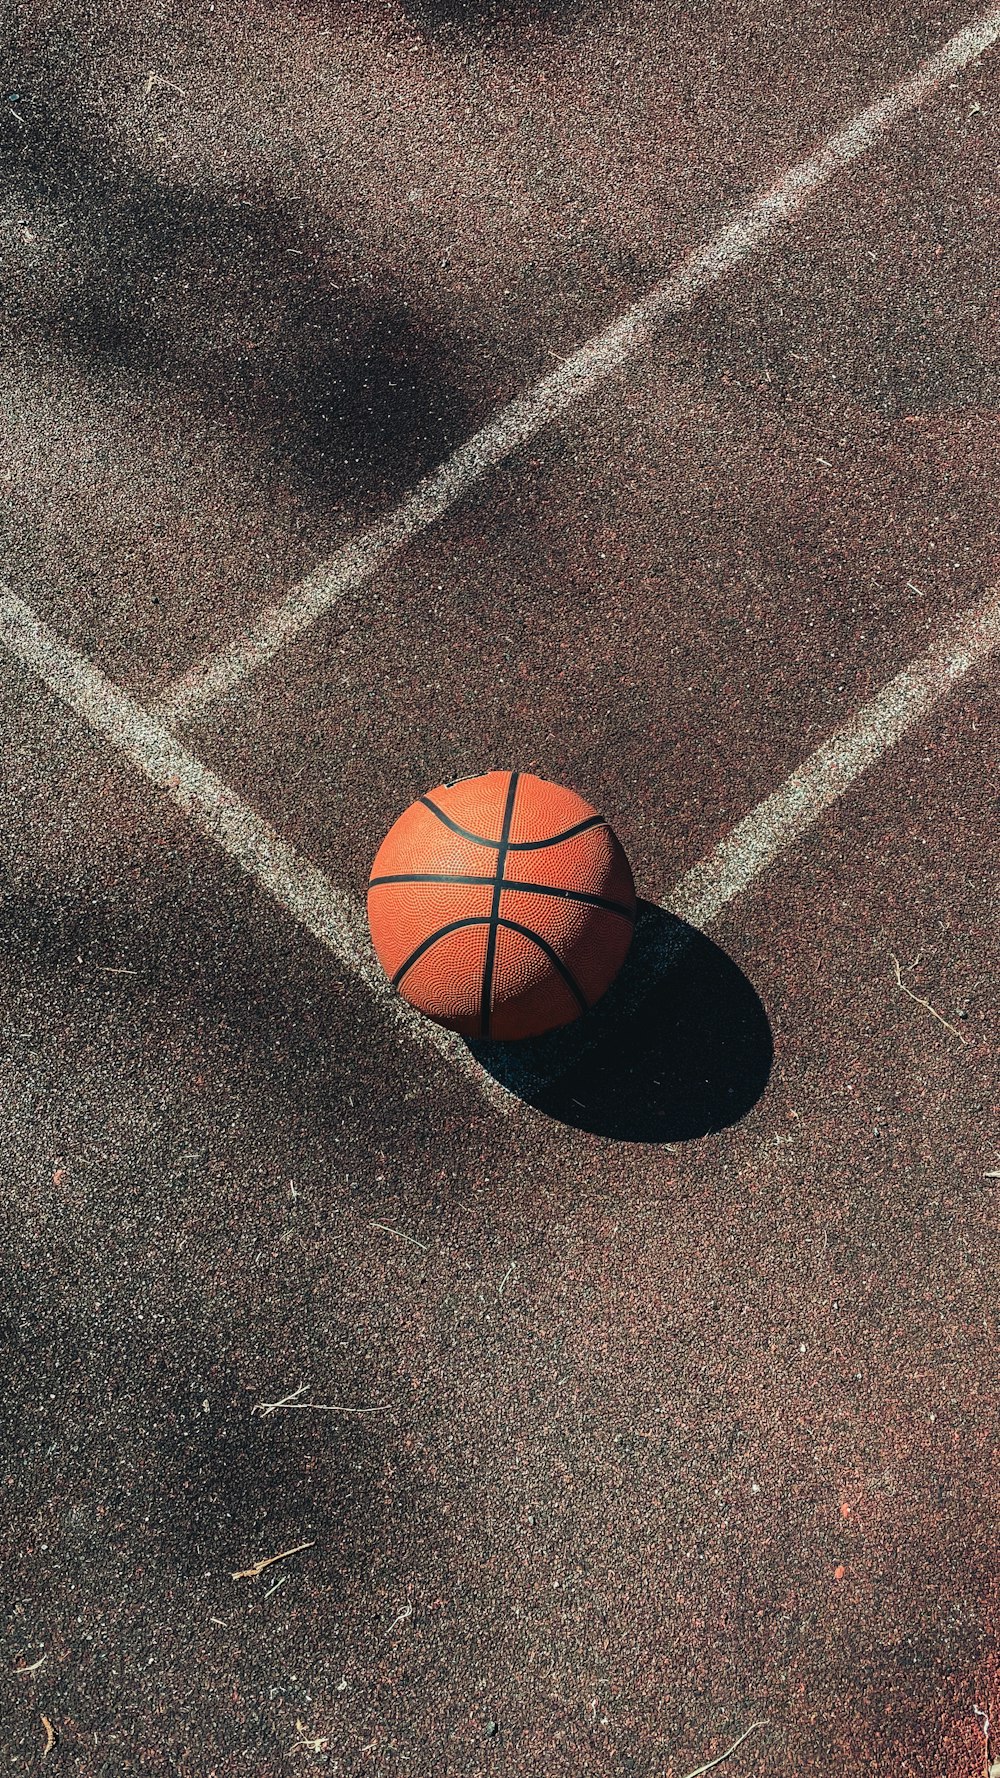 Fondos de pantalla de baloncesto: Descarga HD gratuita [500+ HQ] | Unsplash